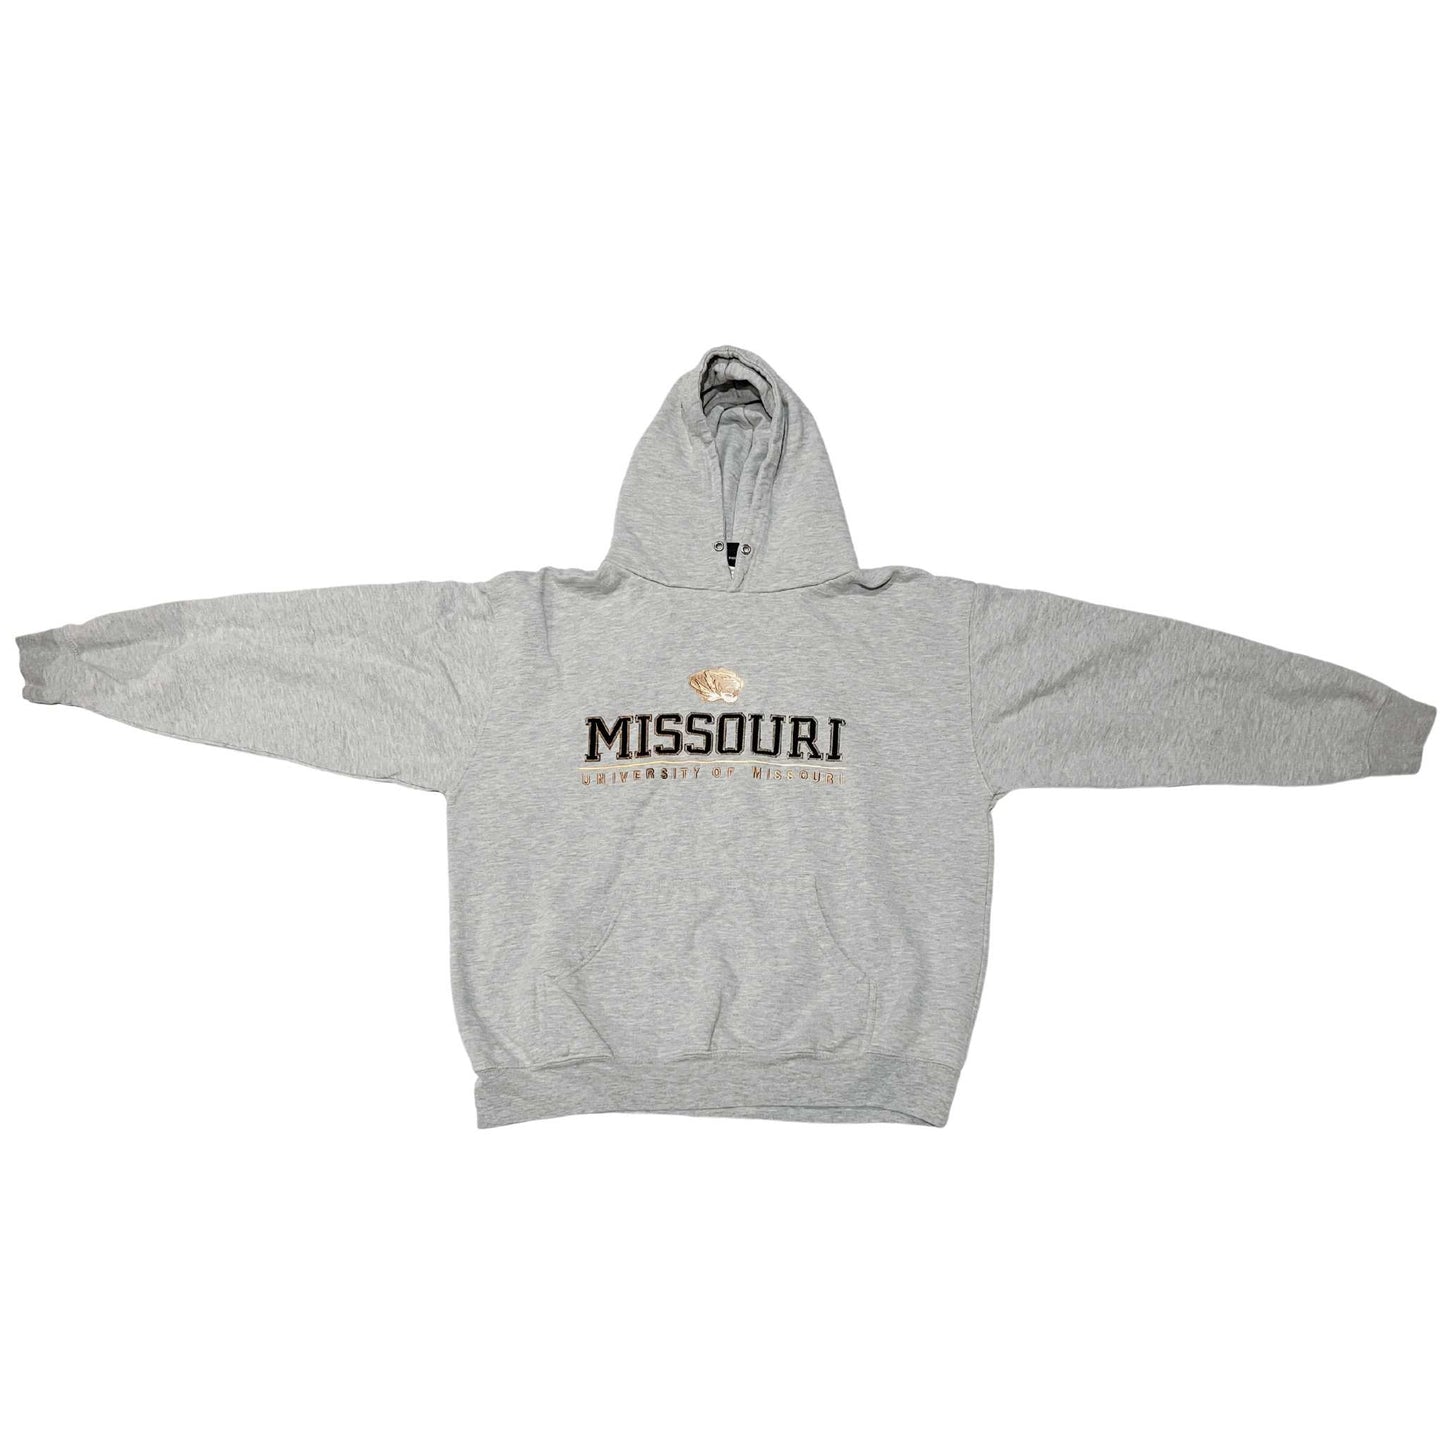 University Of Missouri: American College Sweatshirt | Size M